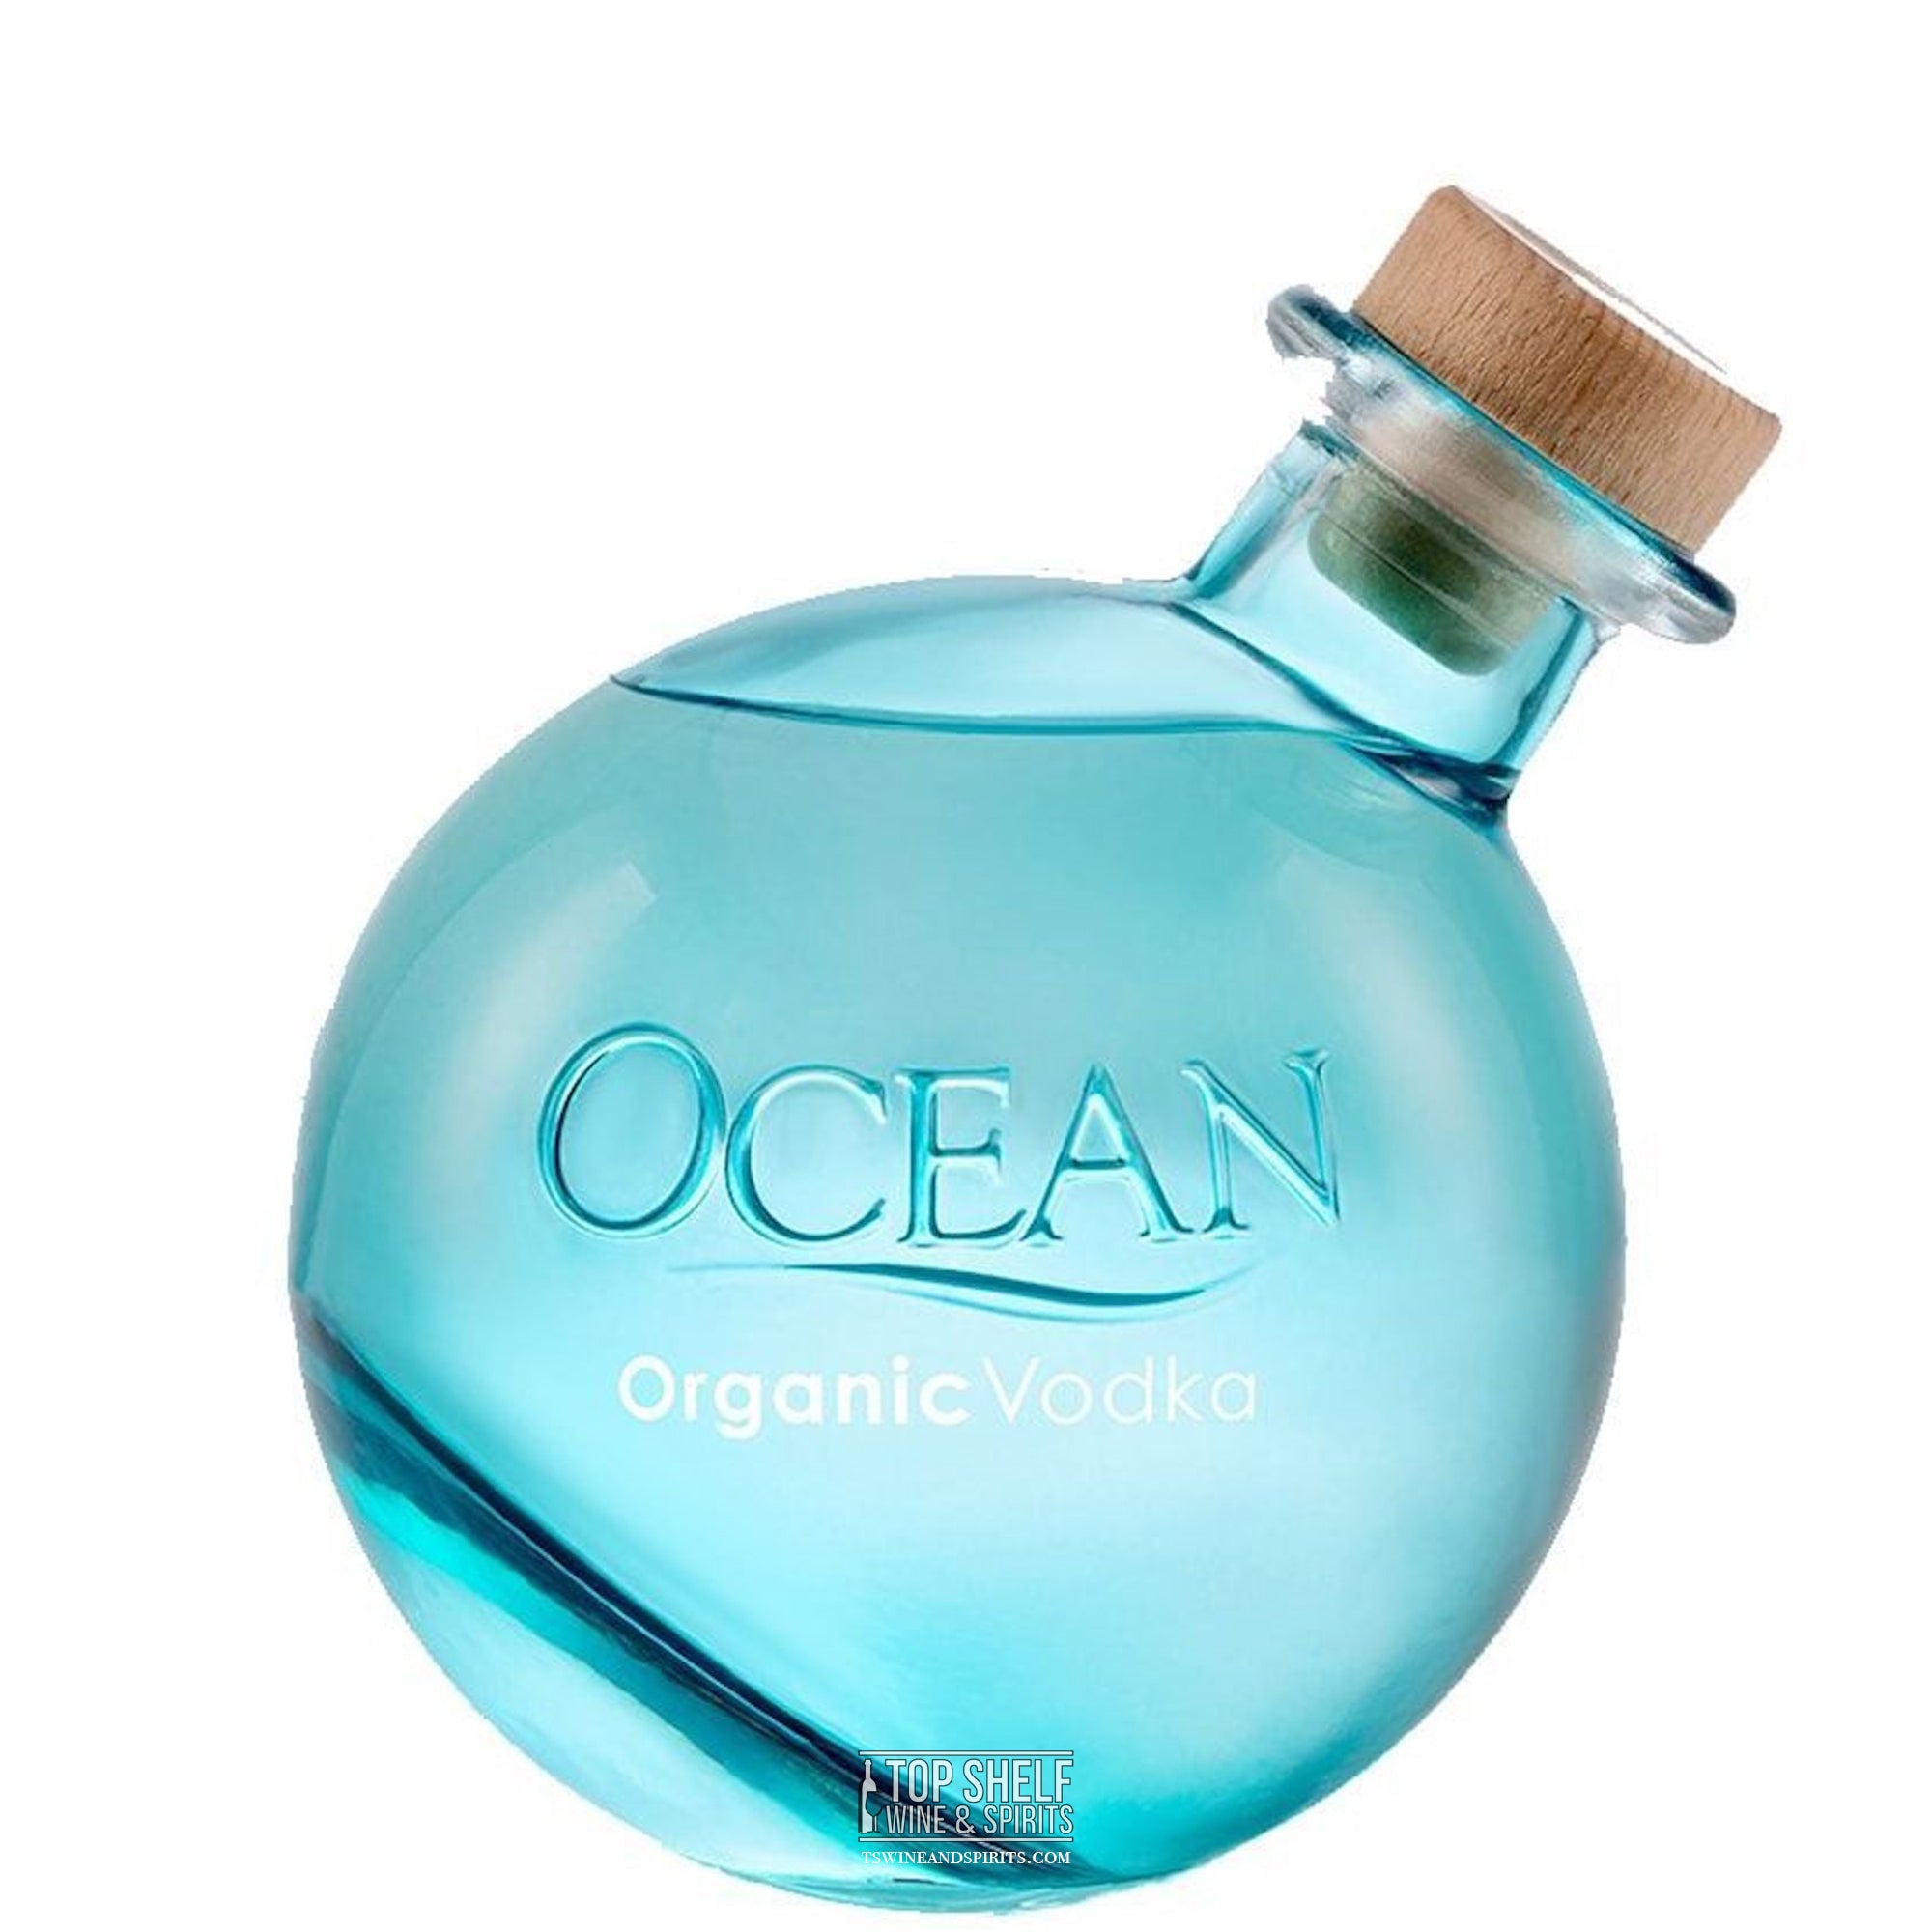 Ocean Vodka Organic - 375mL